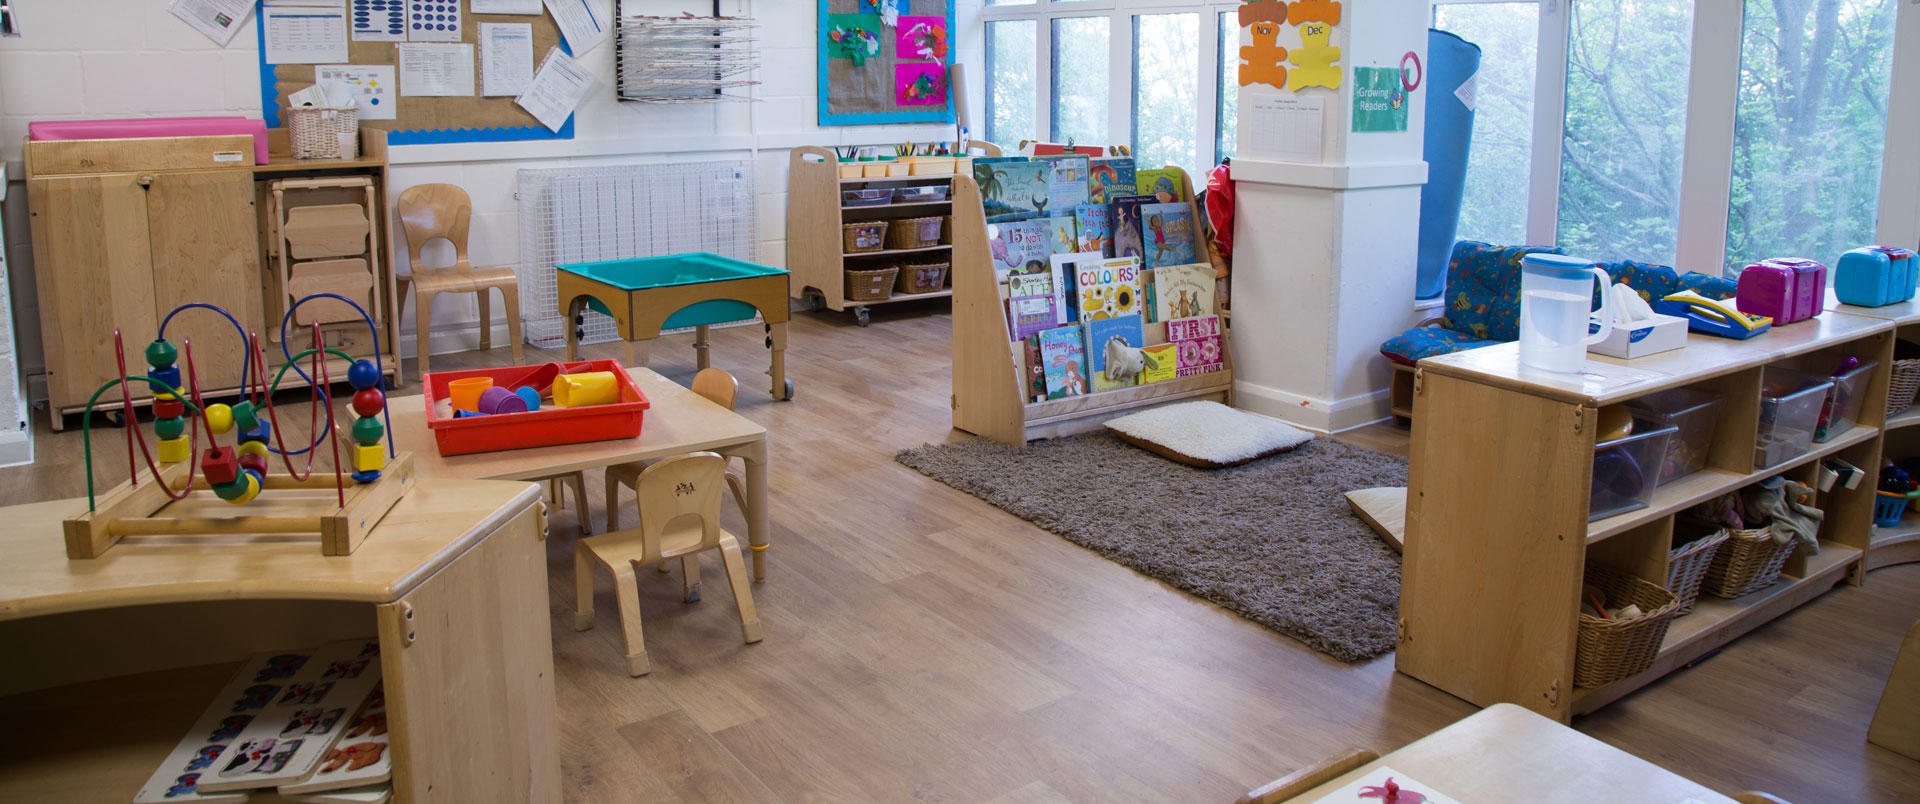 Bright Horizons City Child Nursery and Preschool London 03334 551710